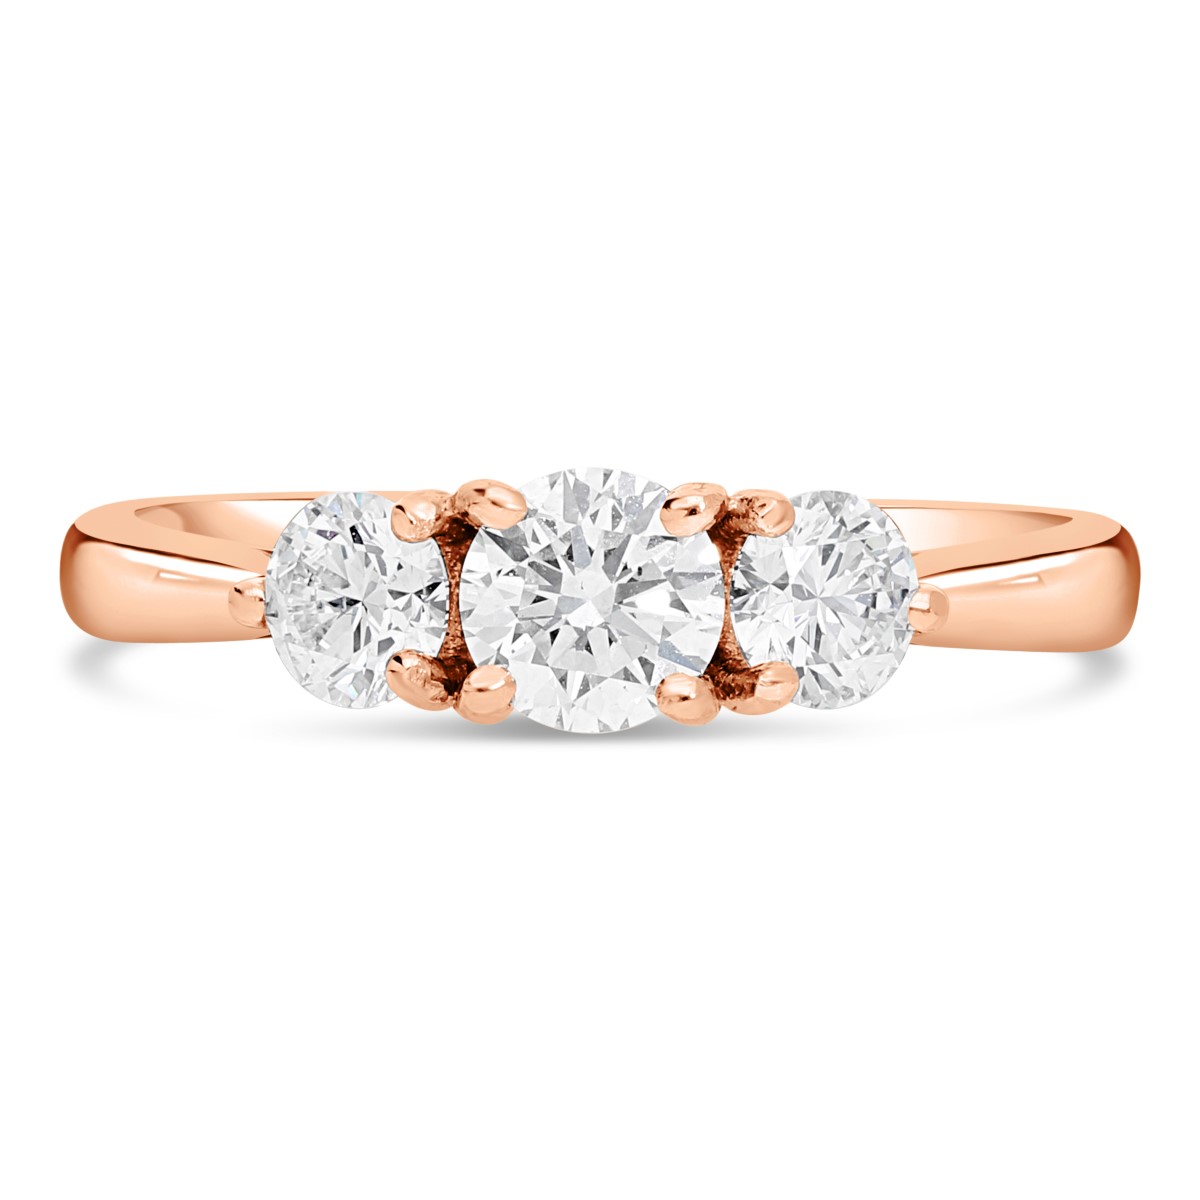 marquises-or-solitaires-diamants-certifies-trilogie-or-rose-750-